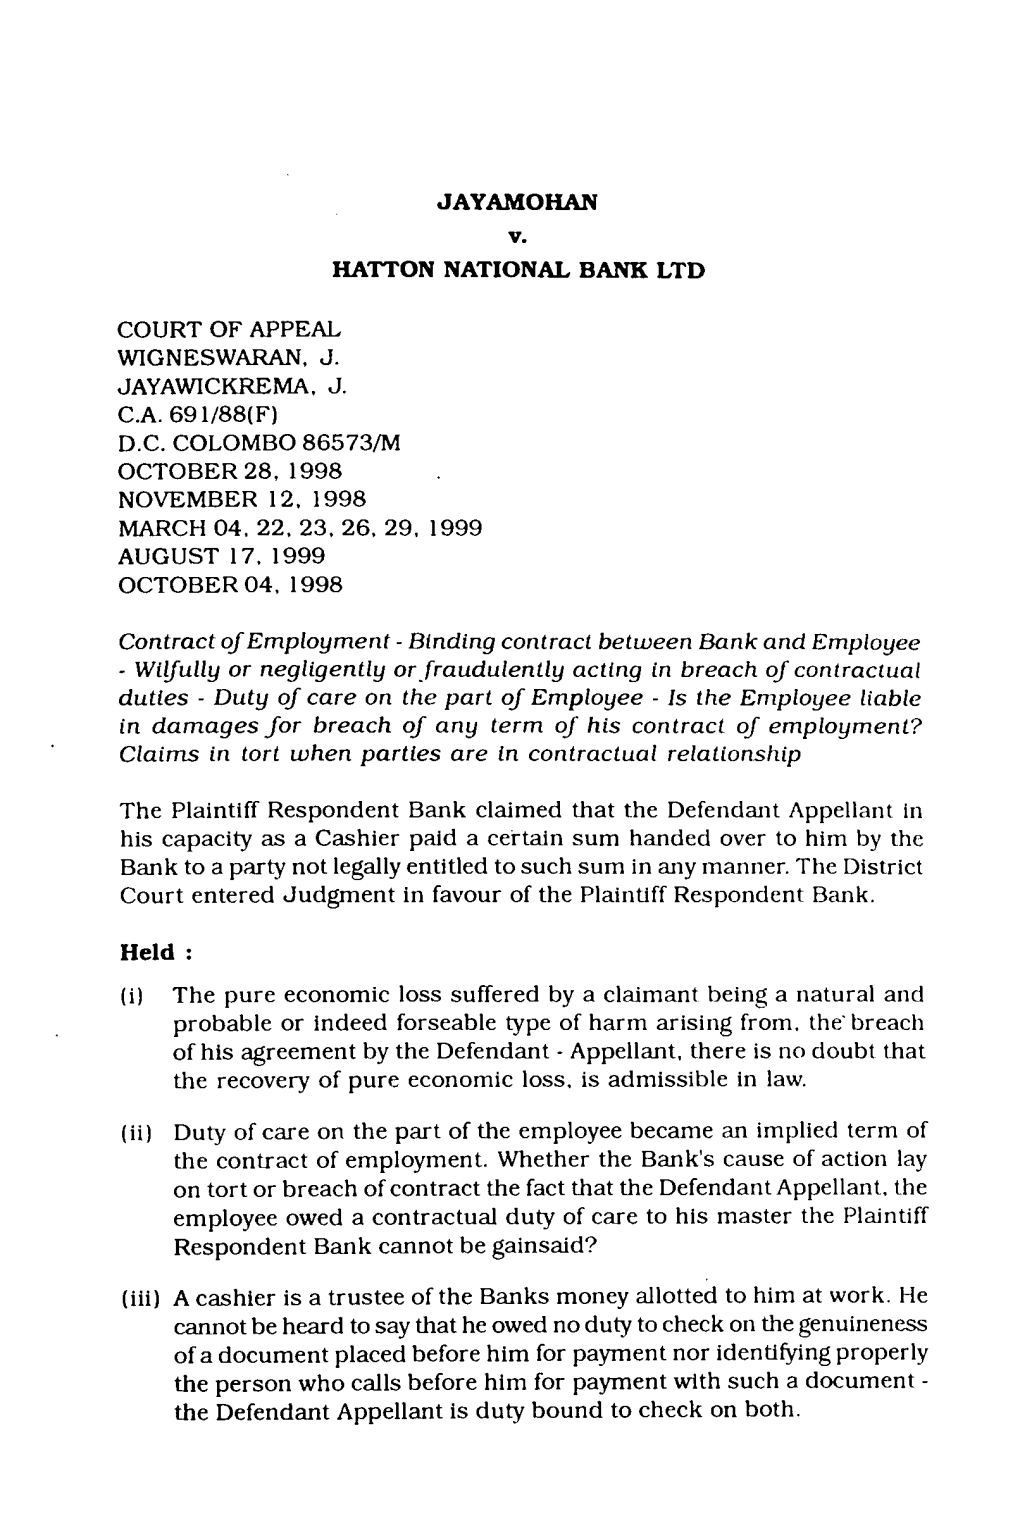 JAYAMOHAN V. HATTON NATIONAL BANK LTD COURT OF